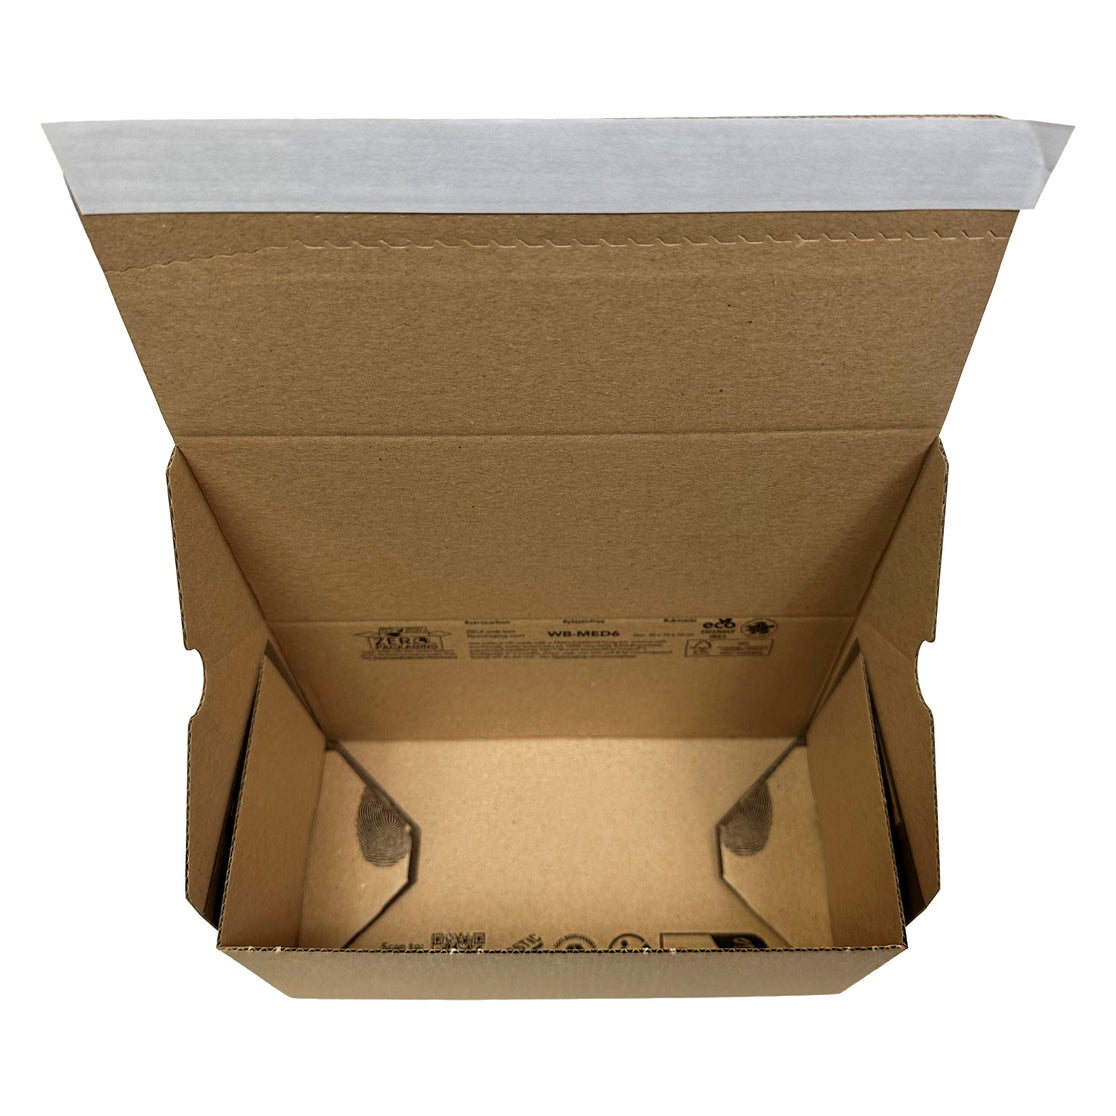 Web Box Medium | Lil Packaging